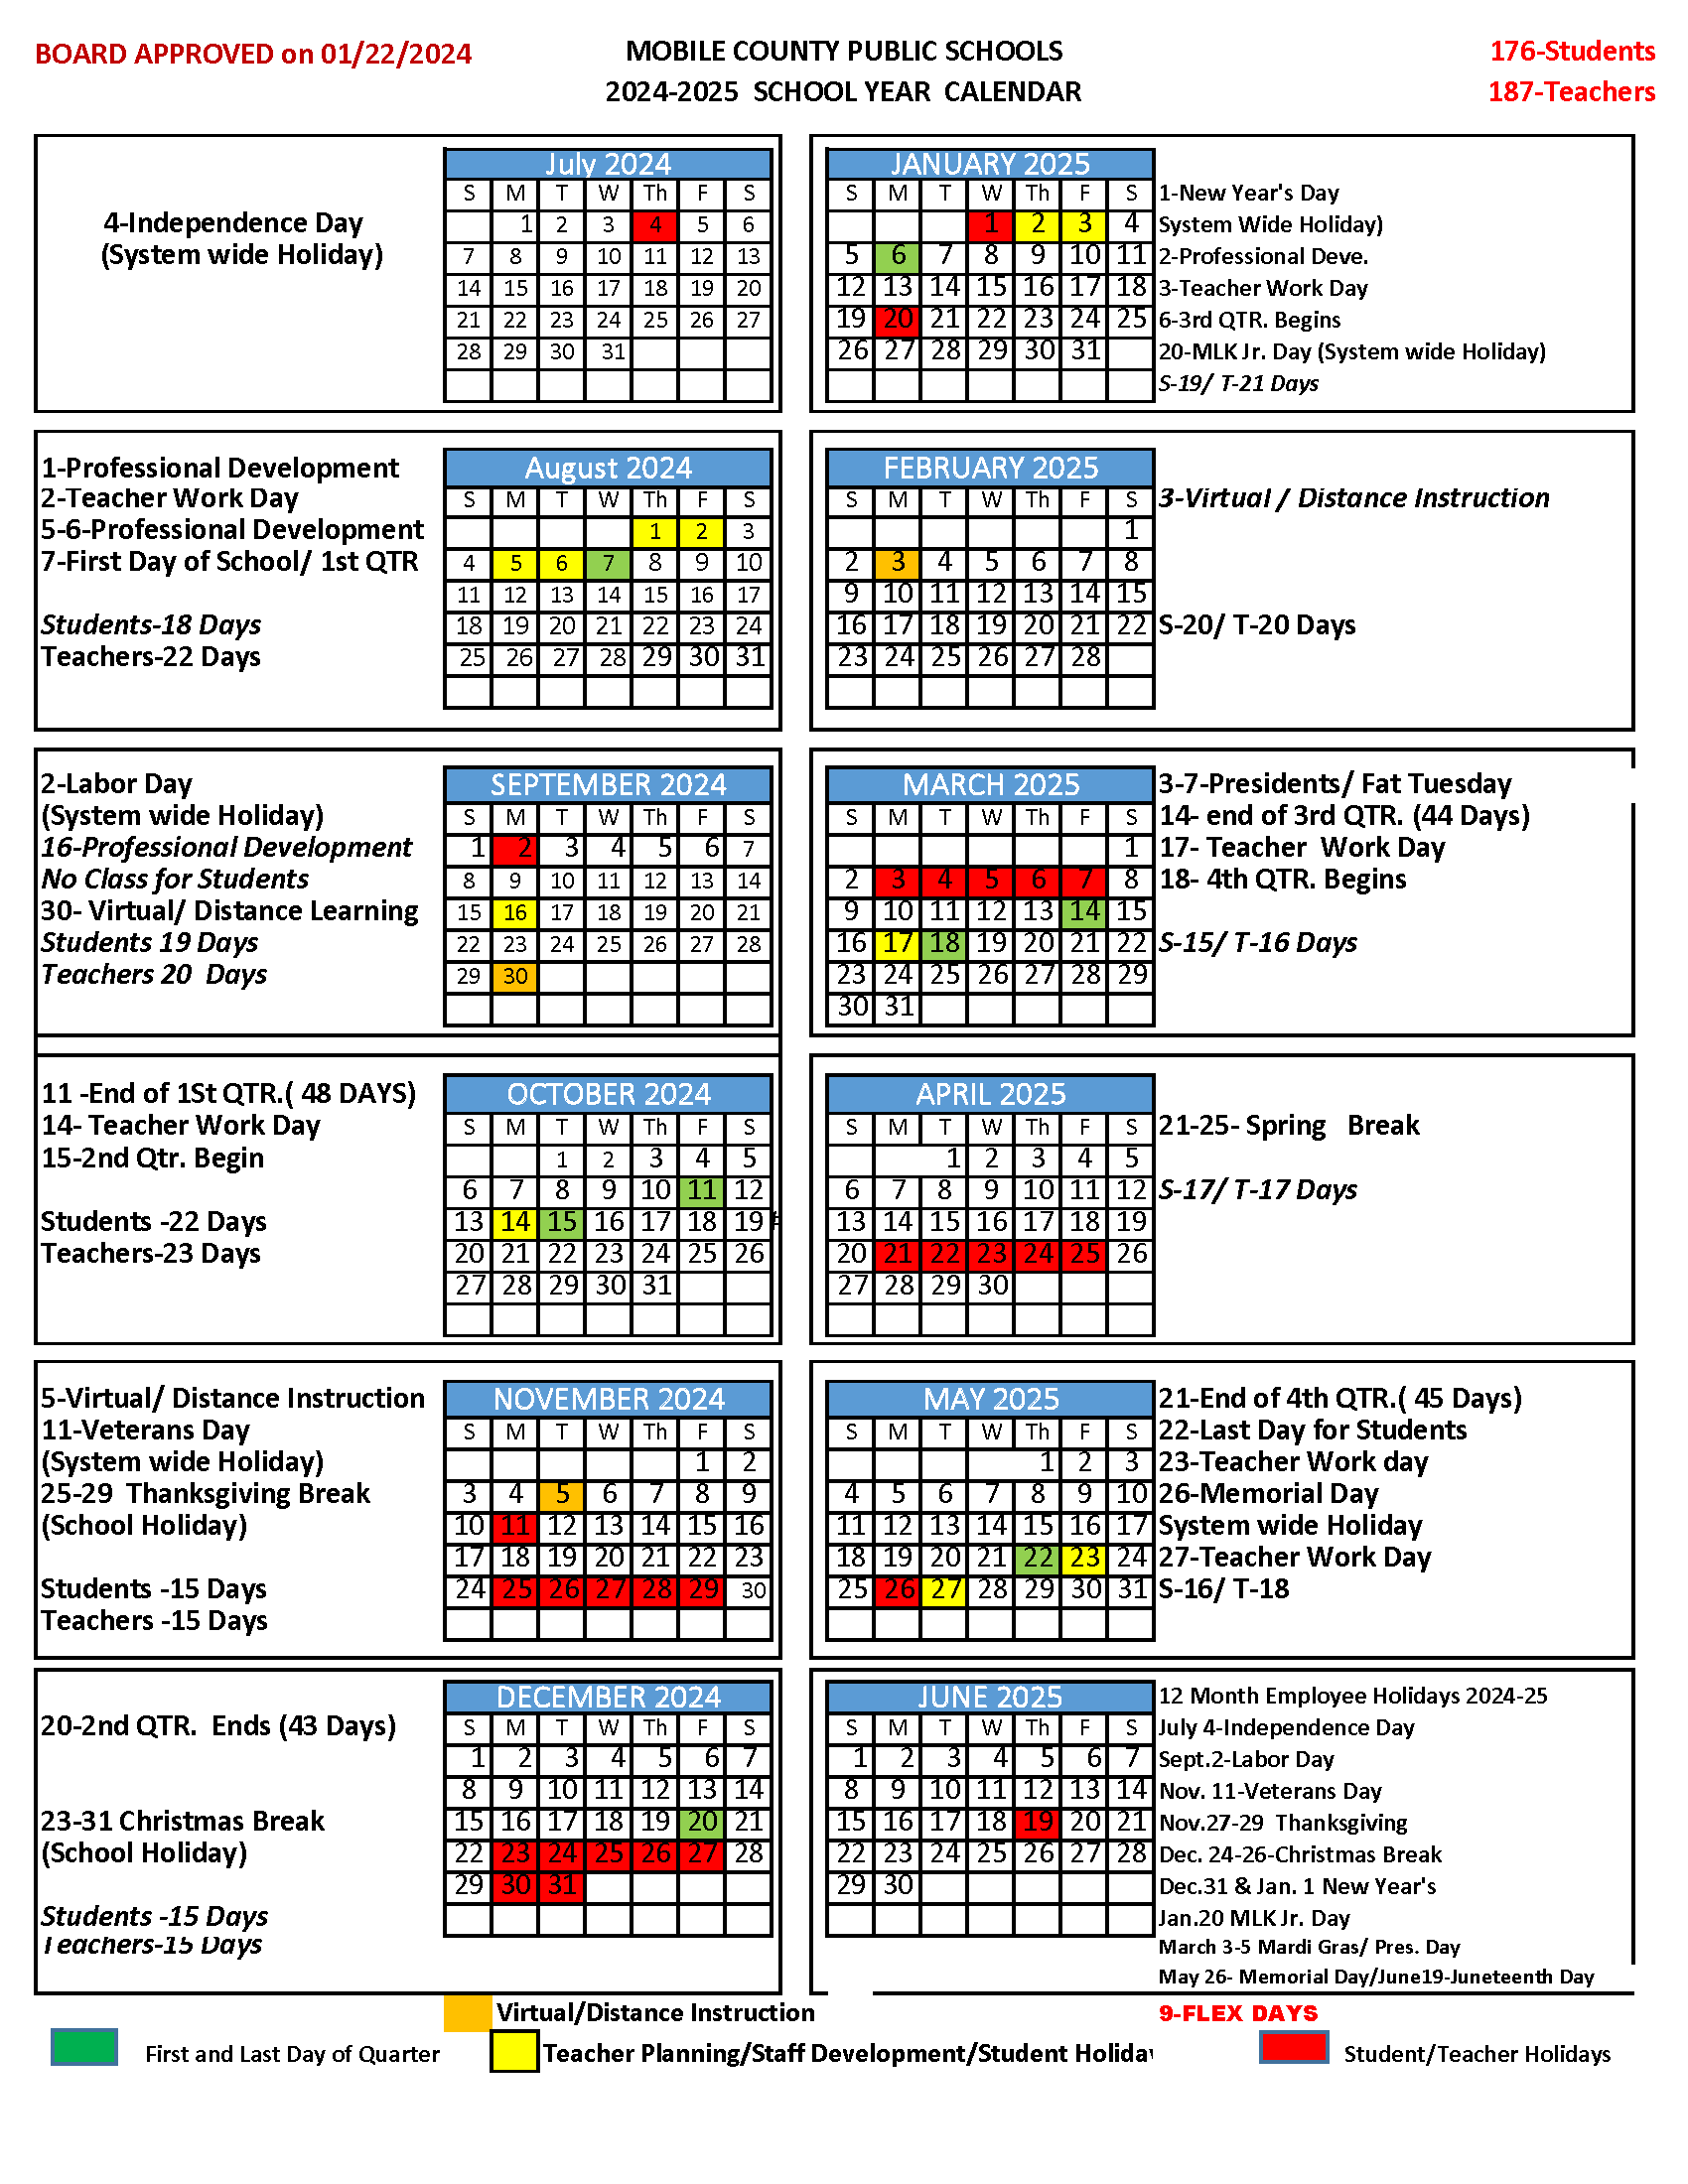 24-25 board approved MCPSS calendar